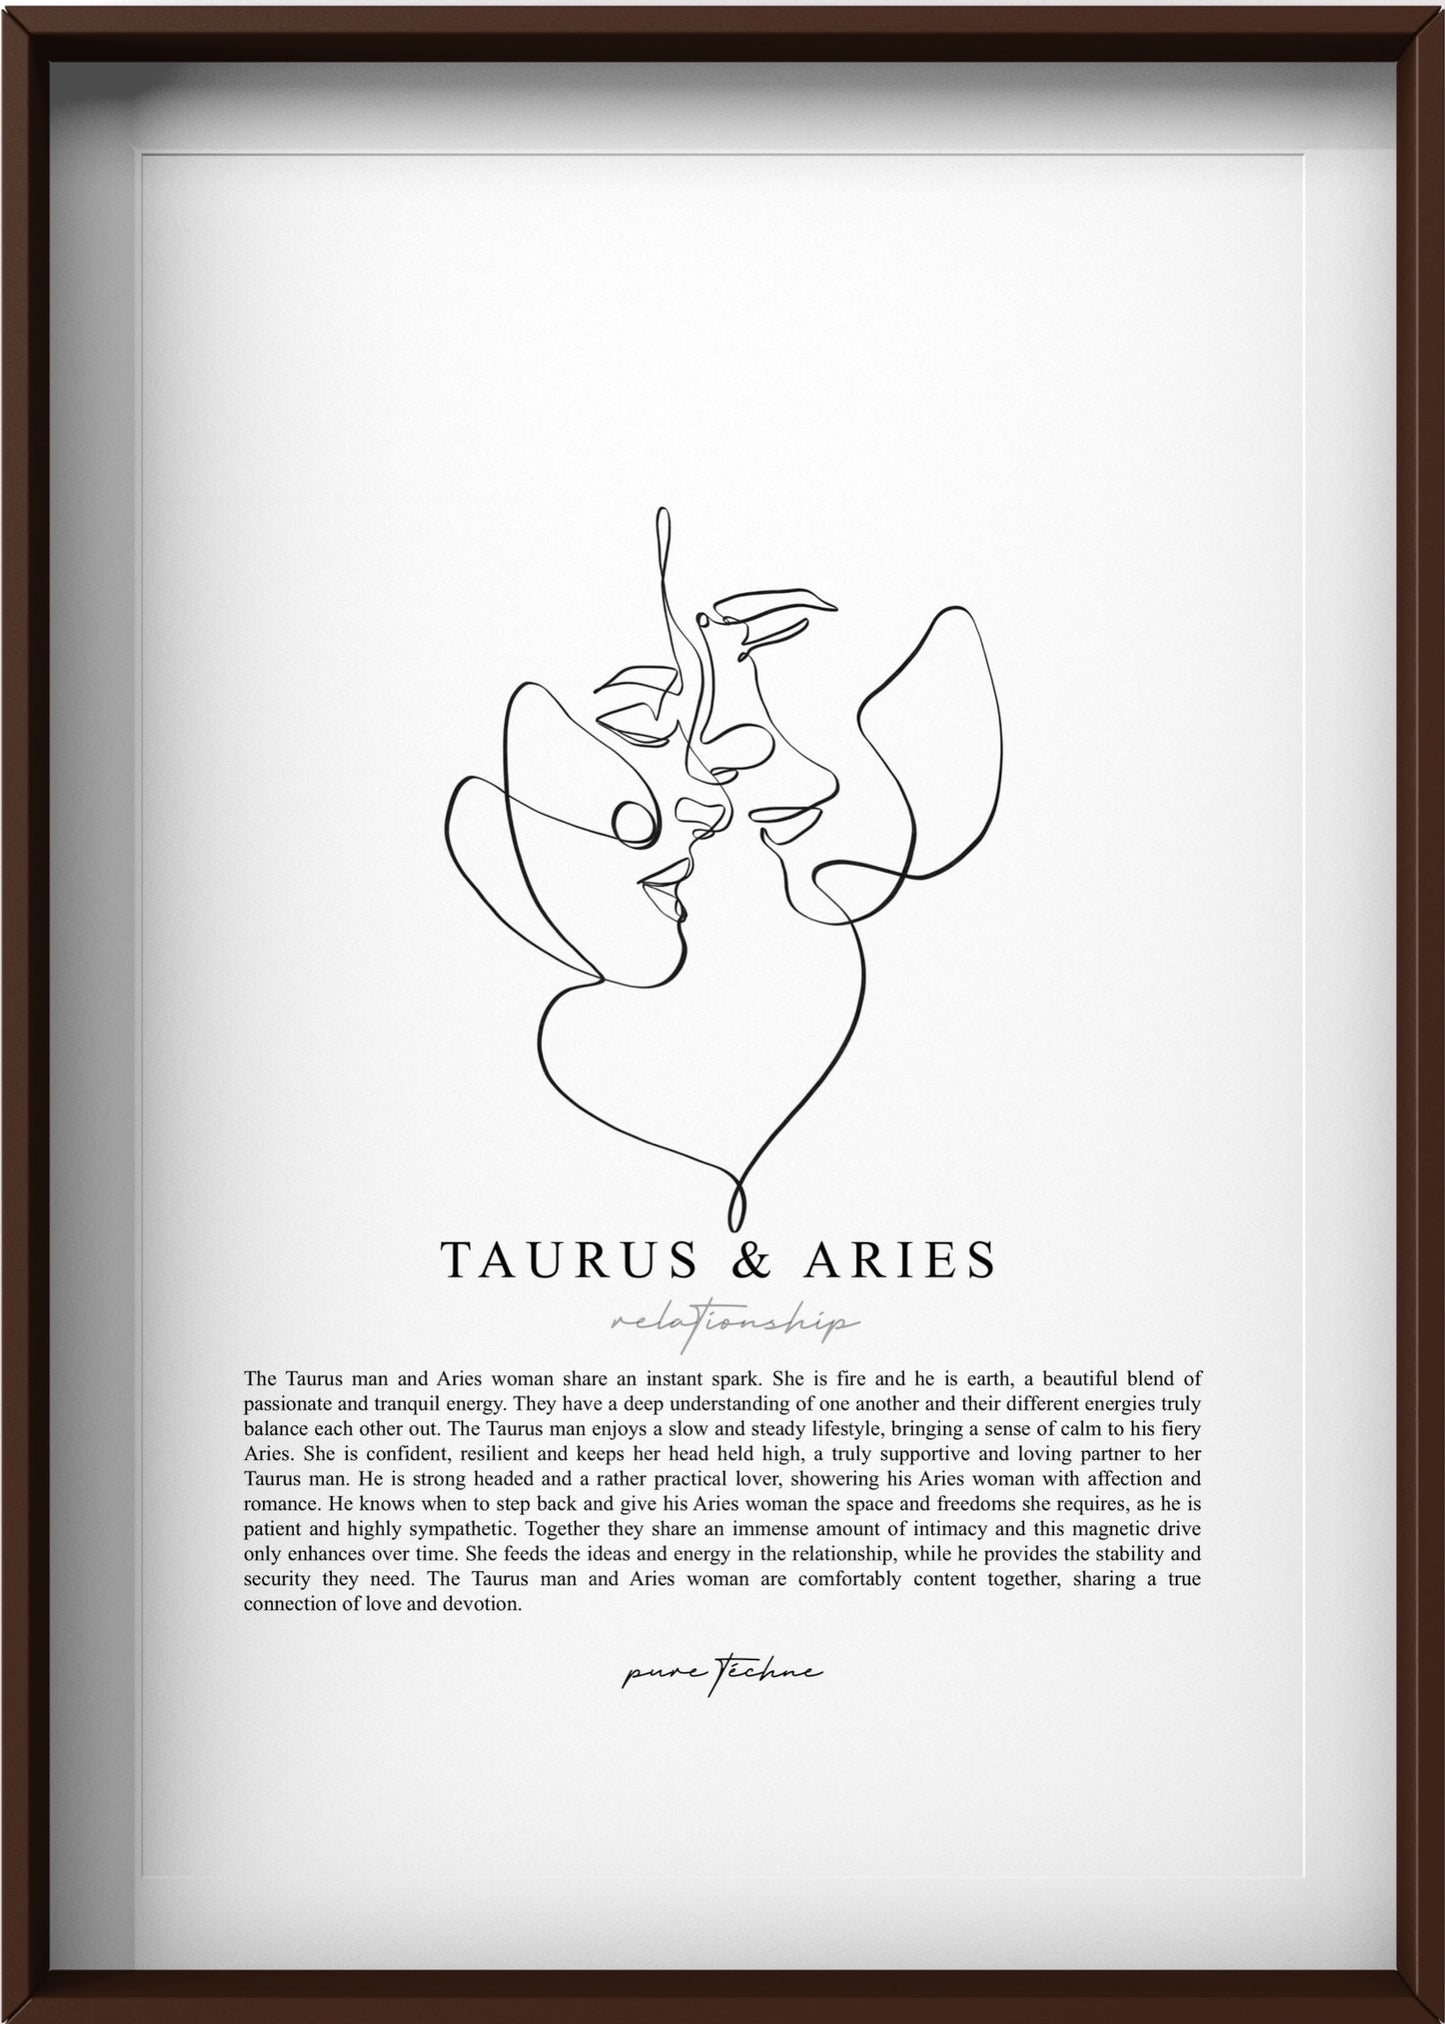 Taurus Man & Aries Woman